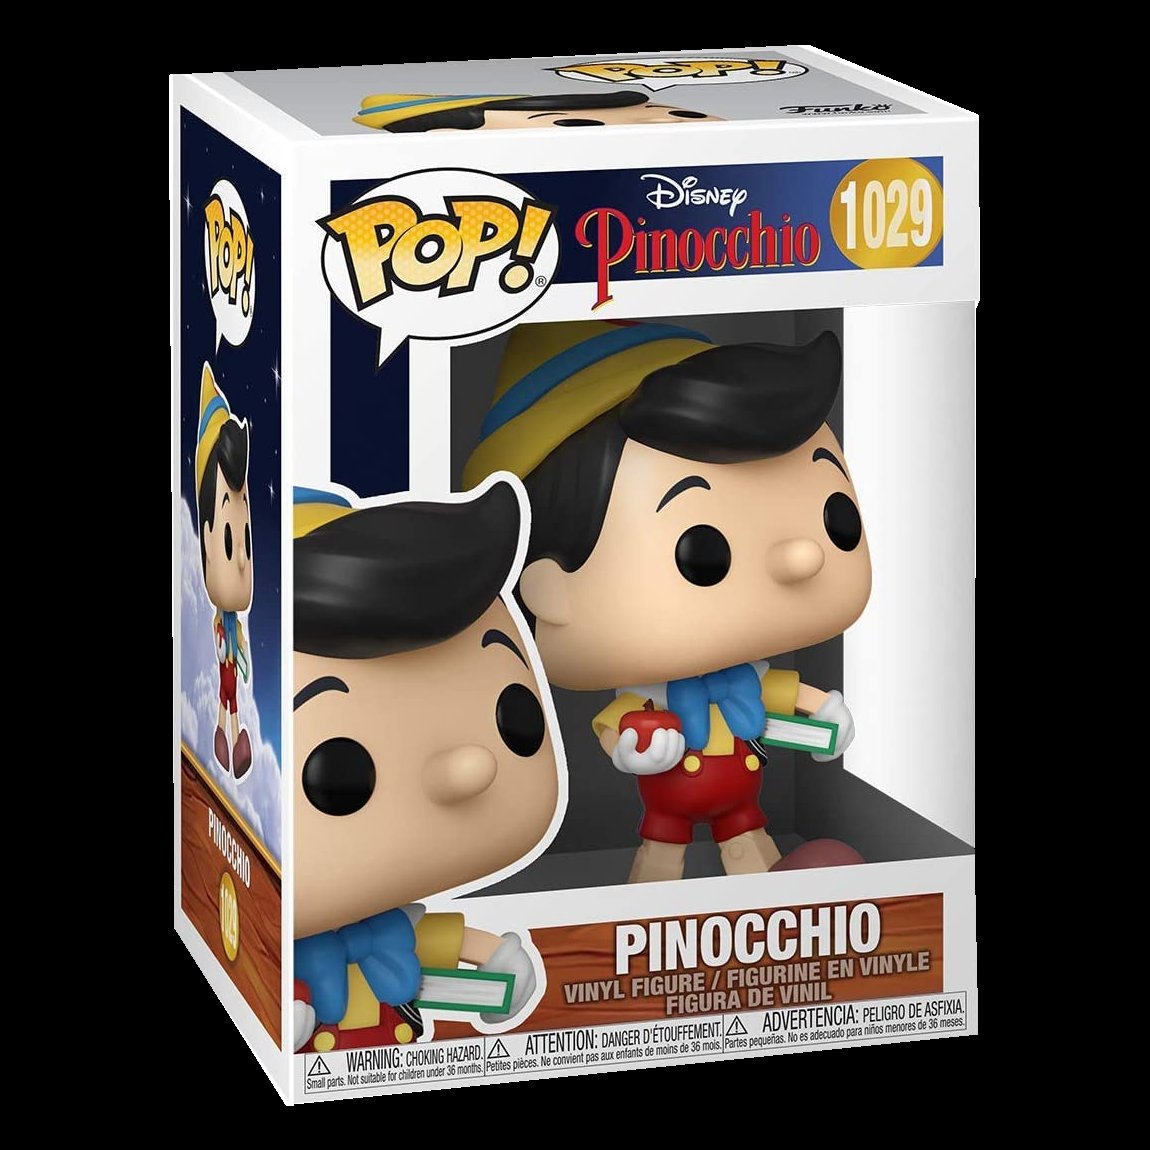 Funko Pop Disney Pinocchio 1029